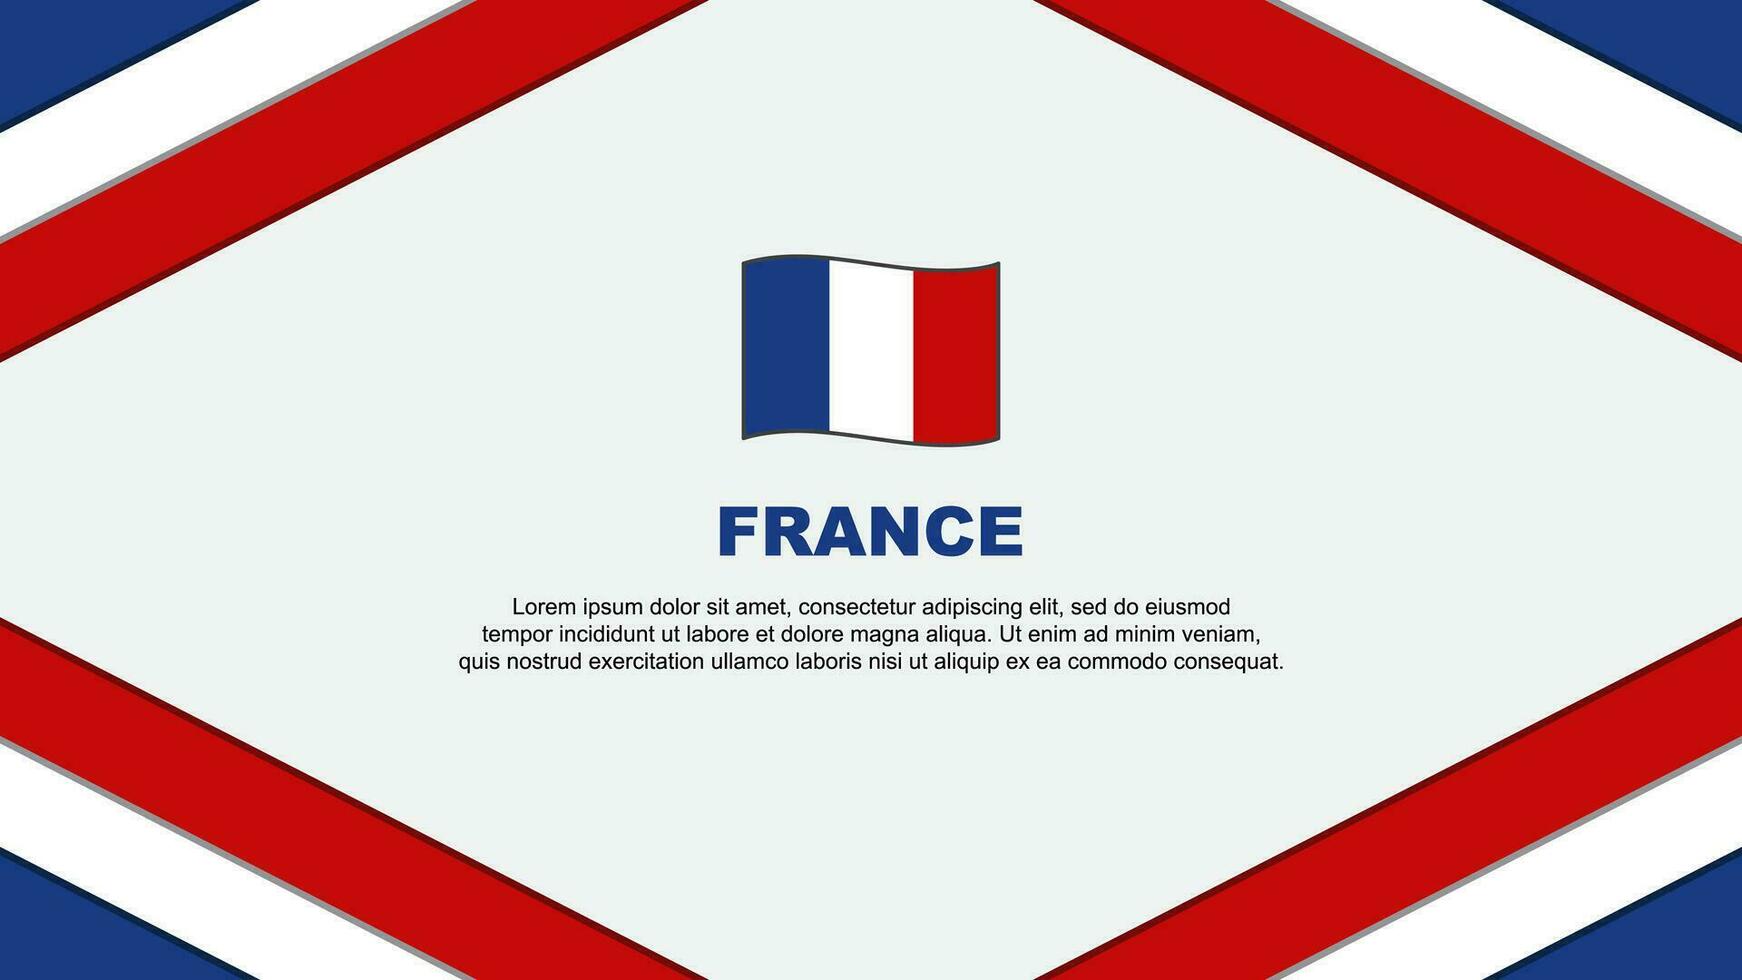 France Flag Abstract Background Design Template. France Independence Day Banner Cartoon Vector Illustration. France